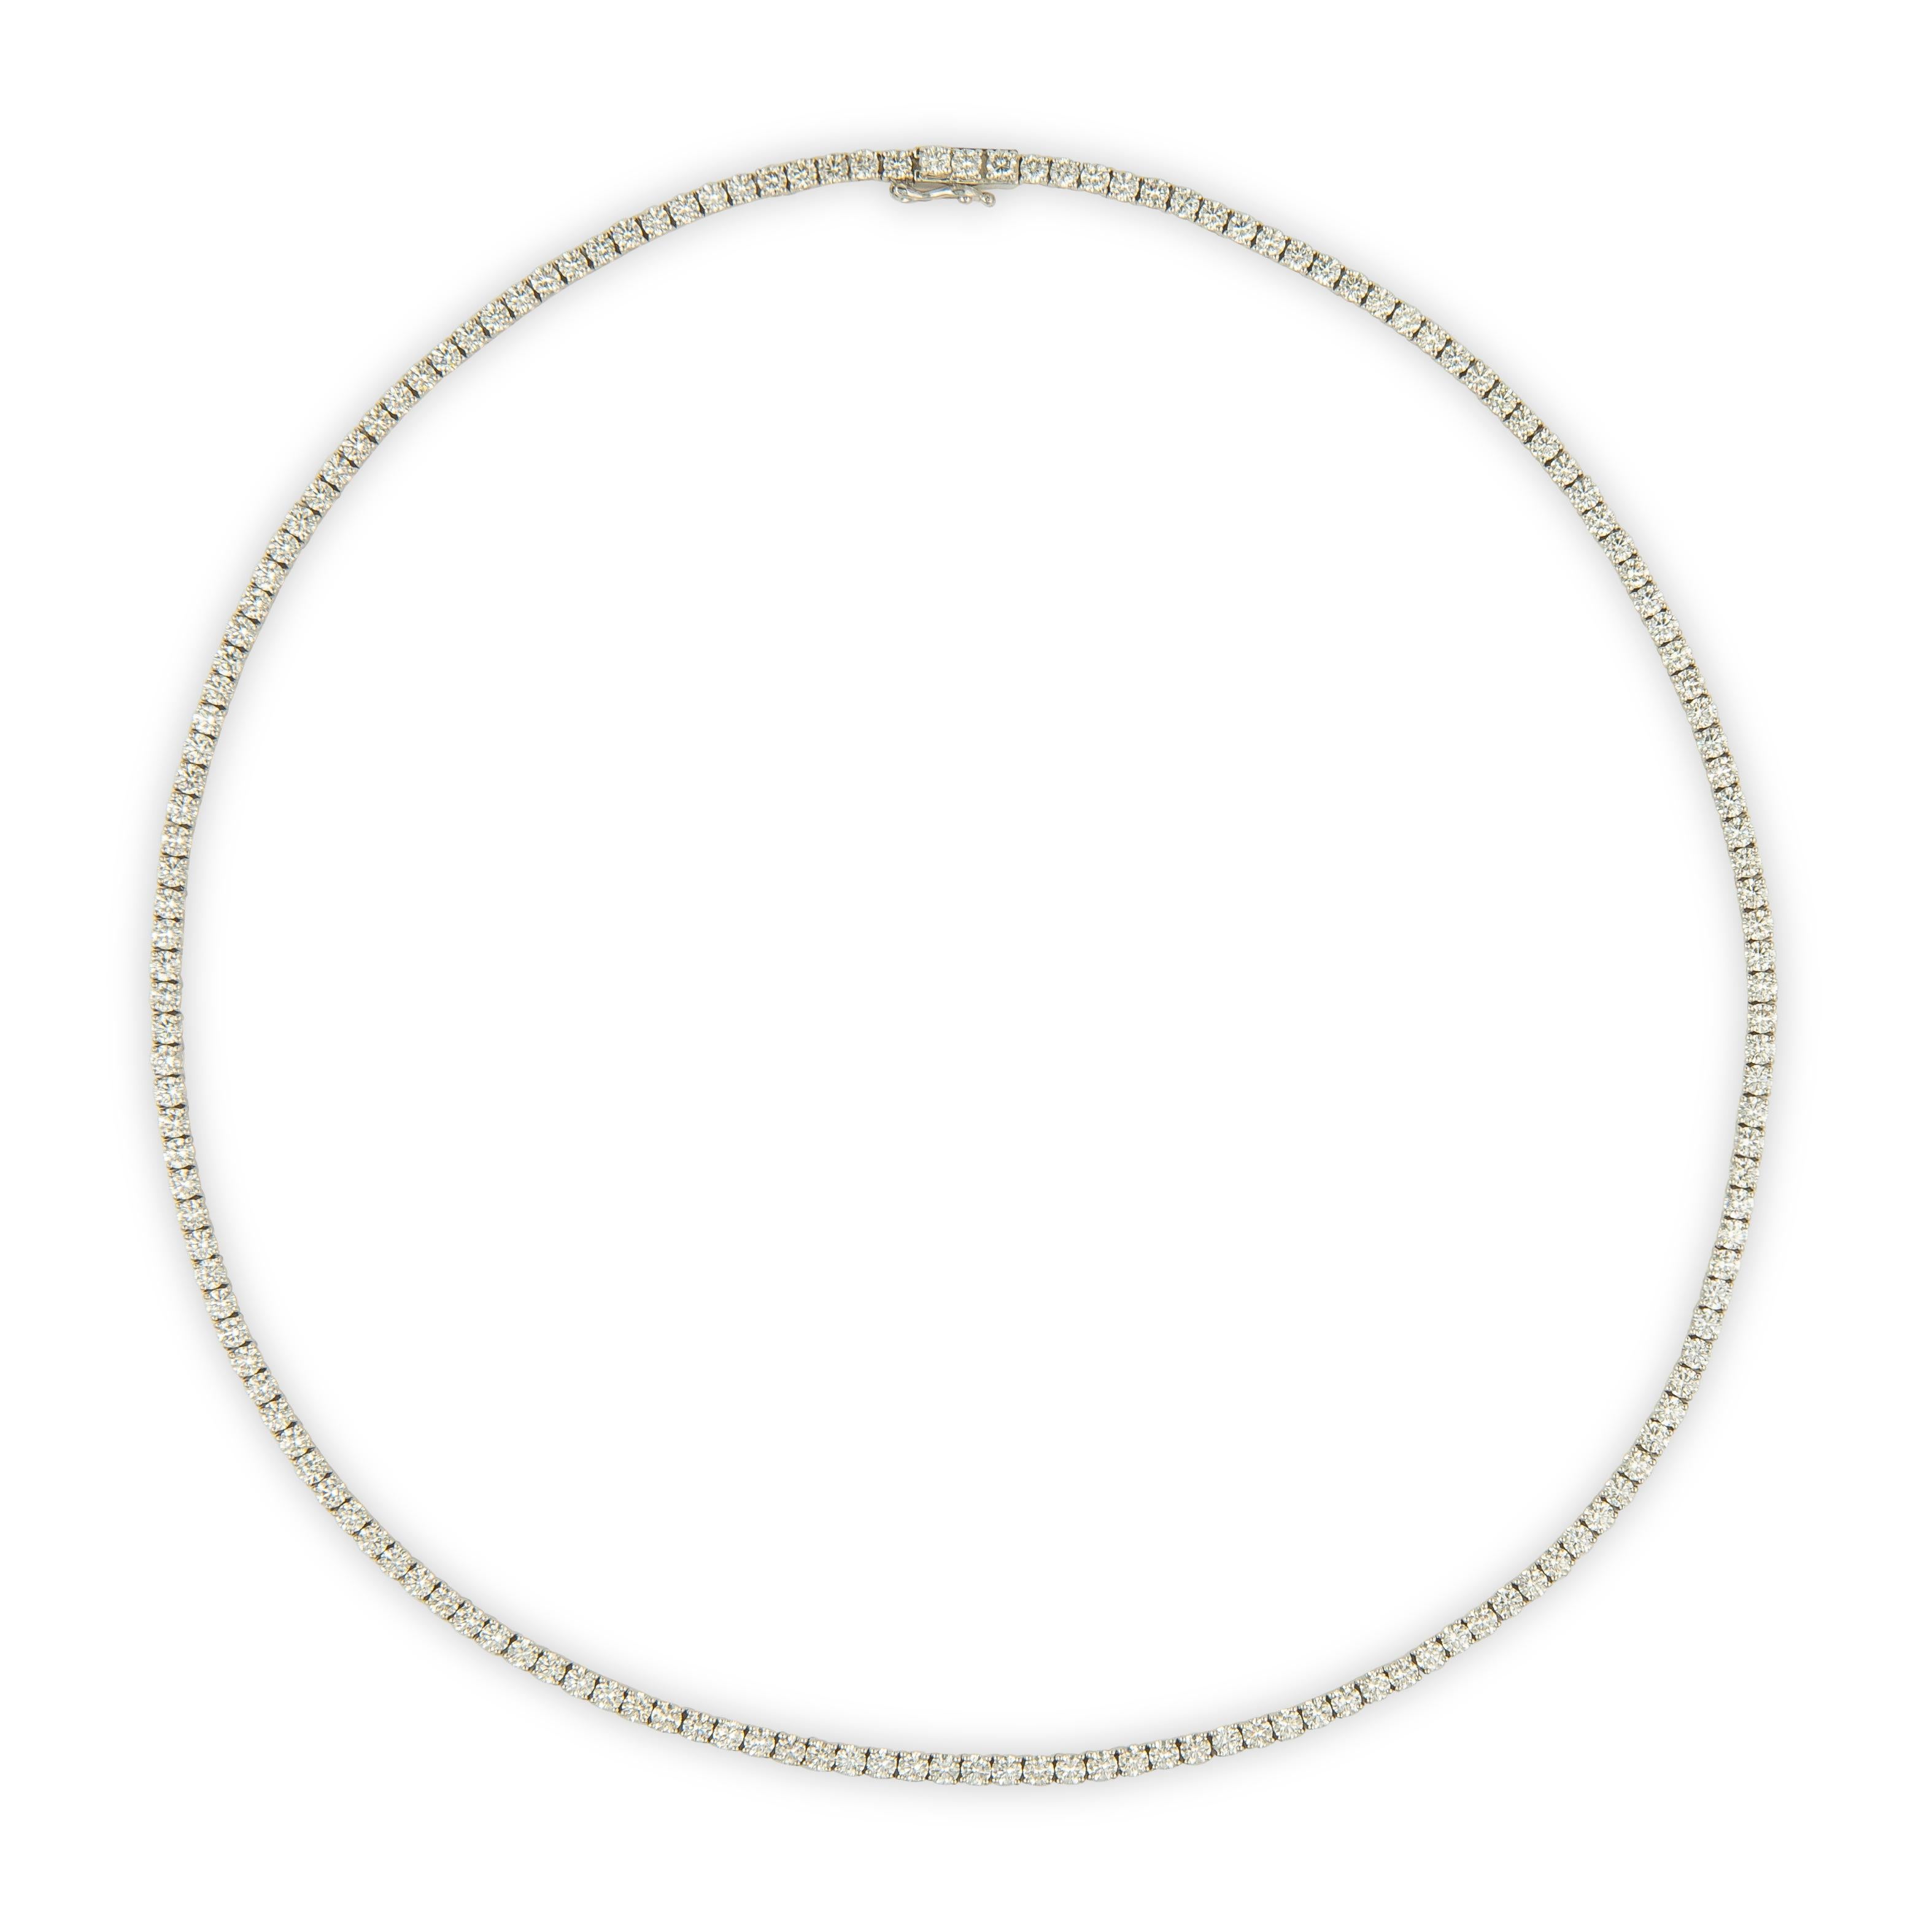 Round Cut Alexander 12.32 Carat Diamond Tennis Necklace 18k White Gold For Sale